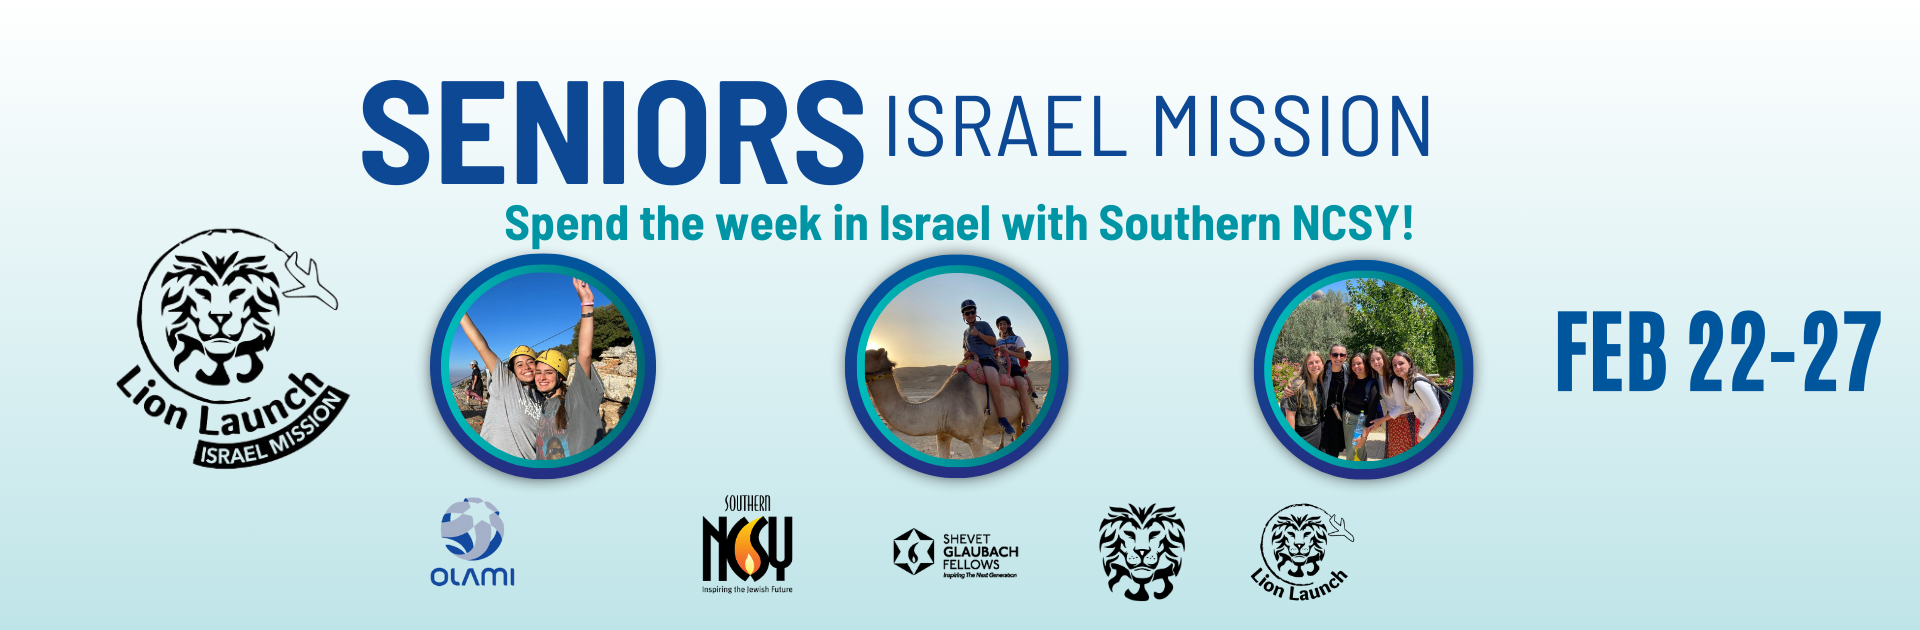 Lion Launch Seniors Israel Mission